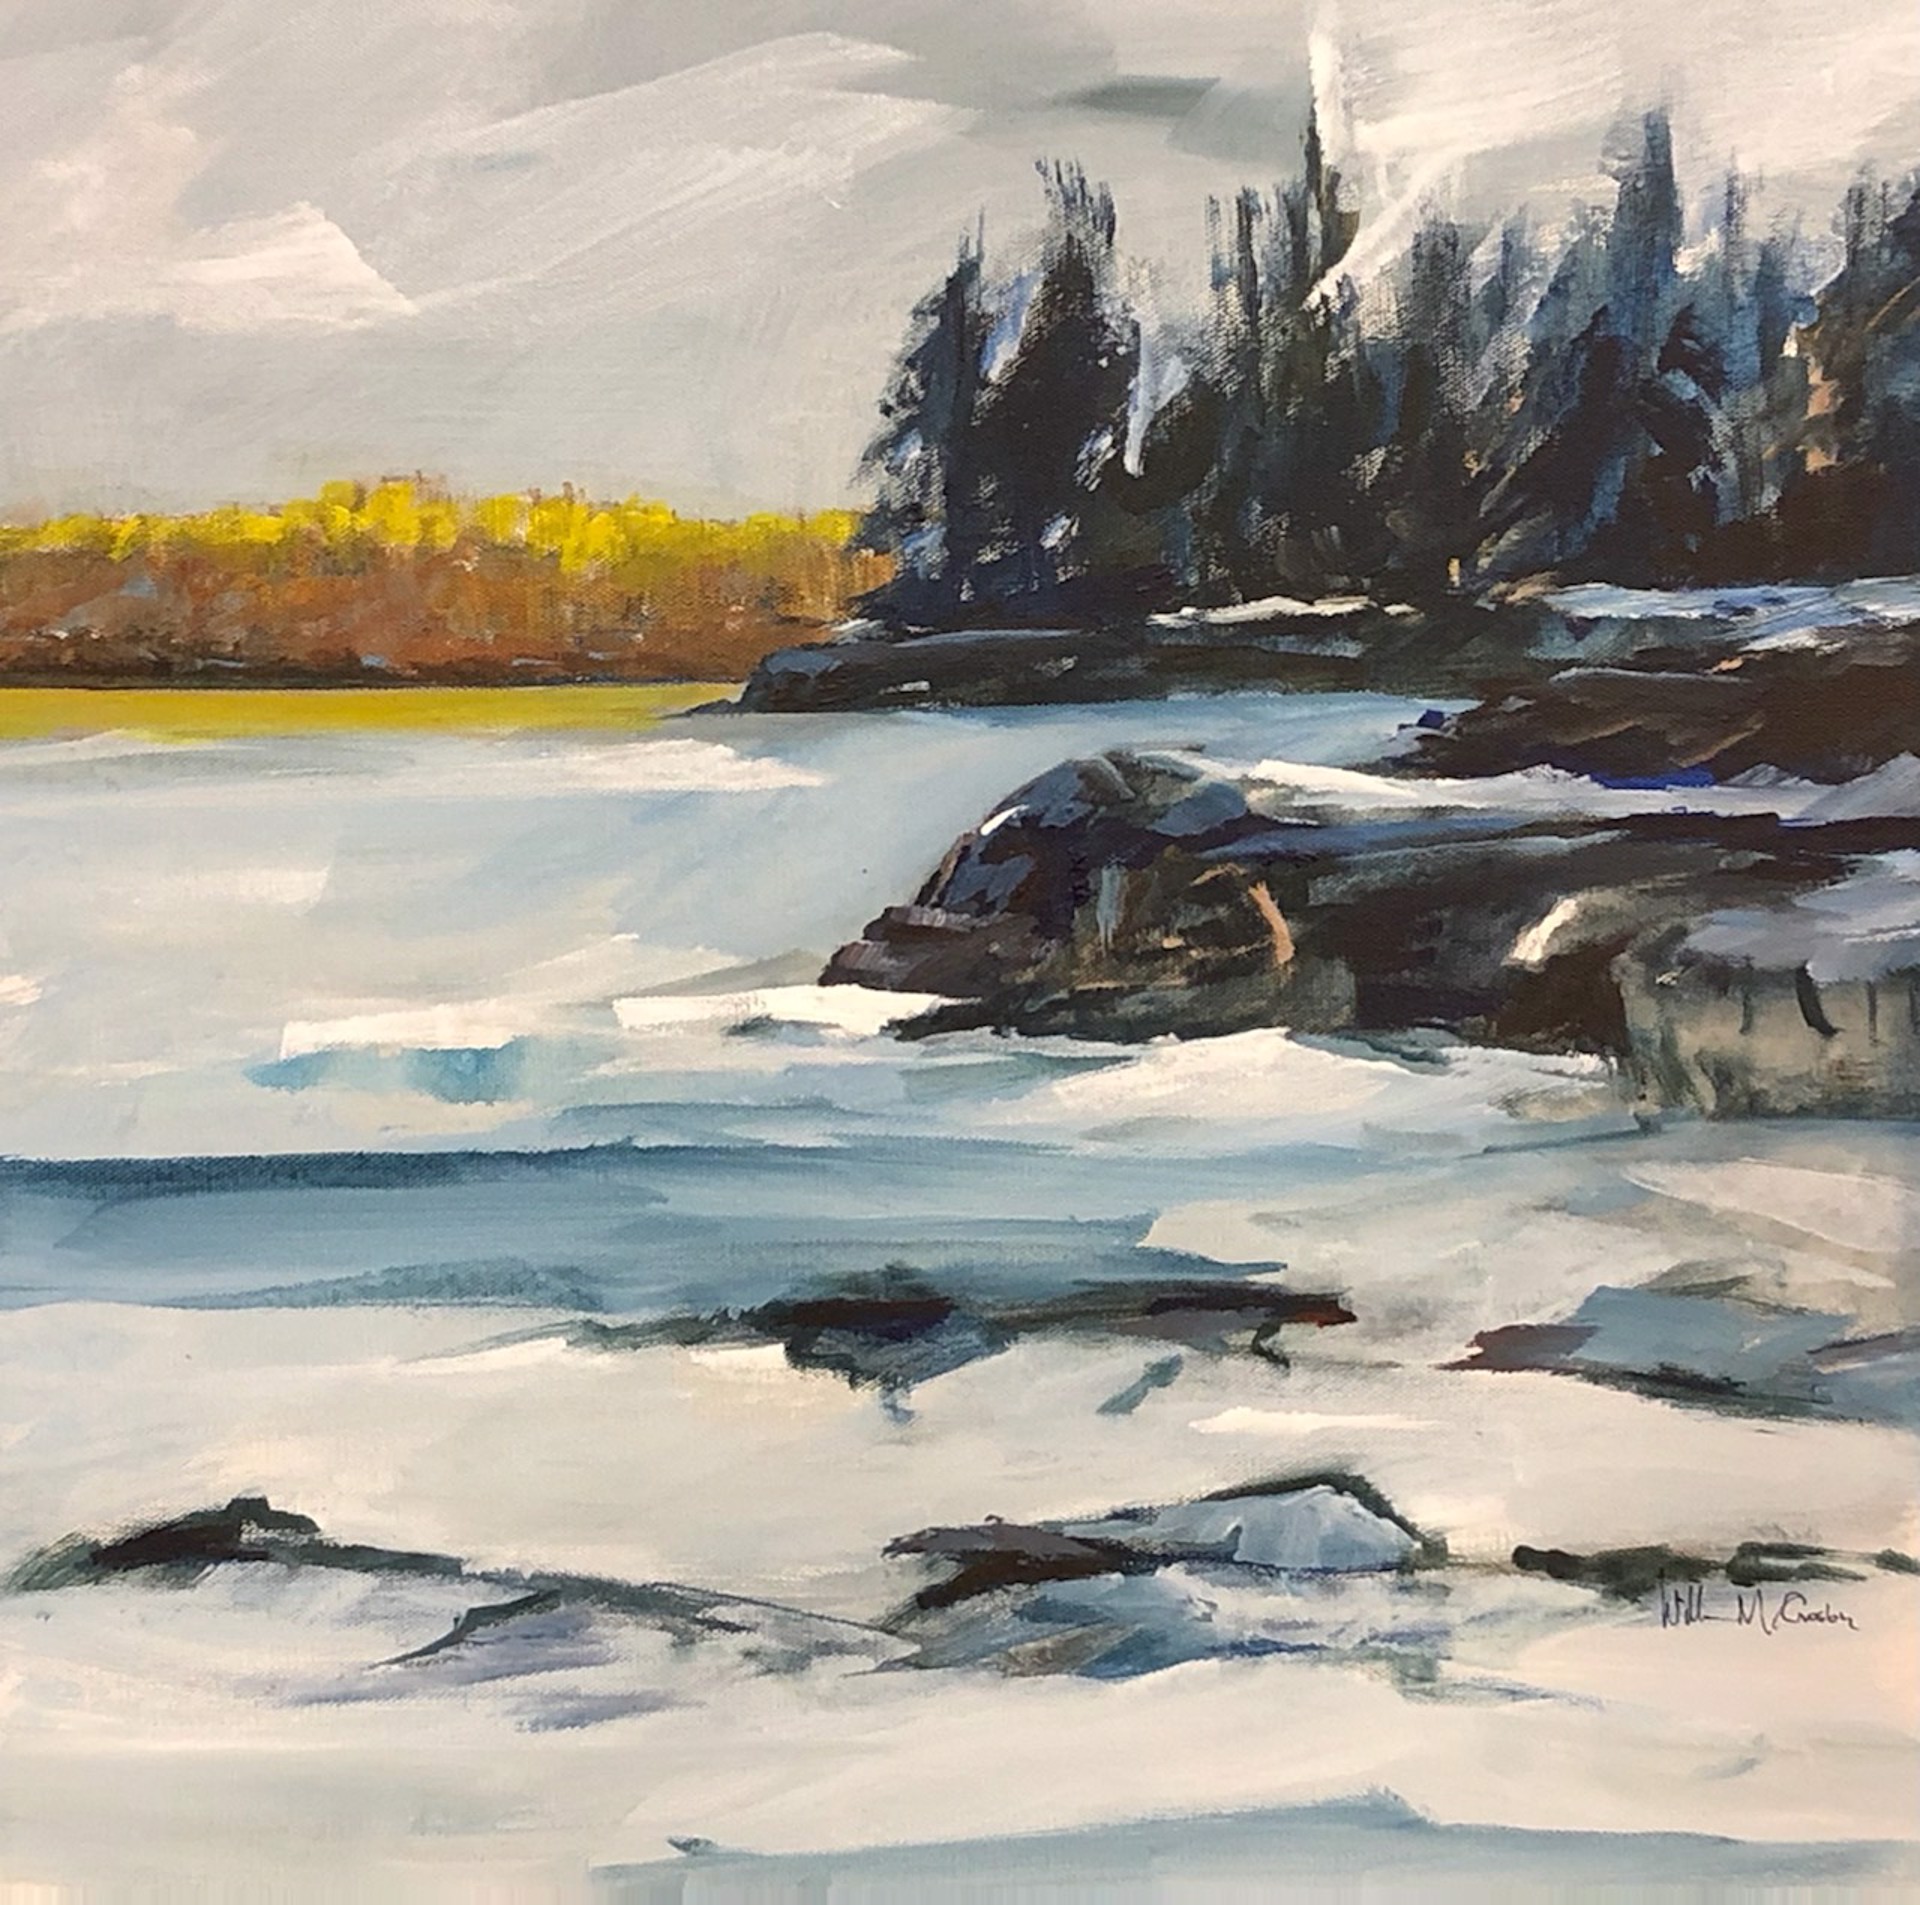 Winter Light, Frozen River II by William Crosby